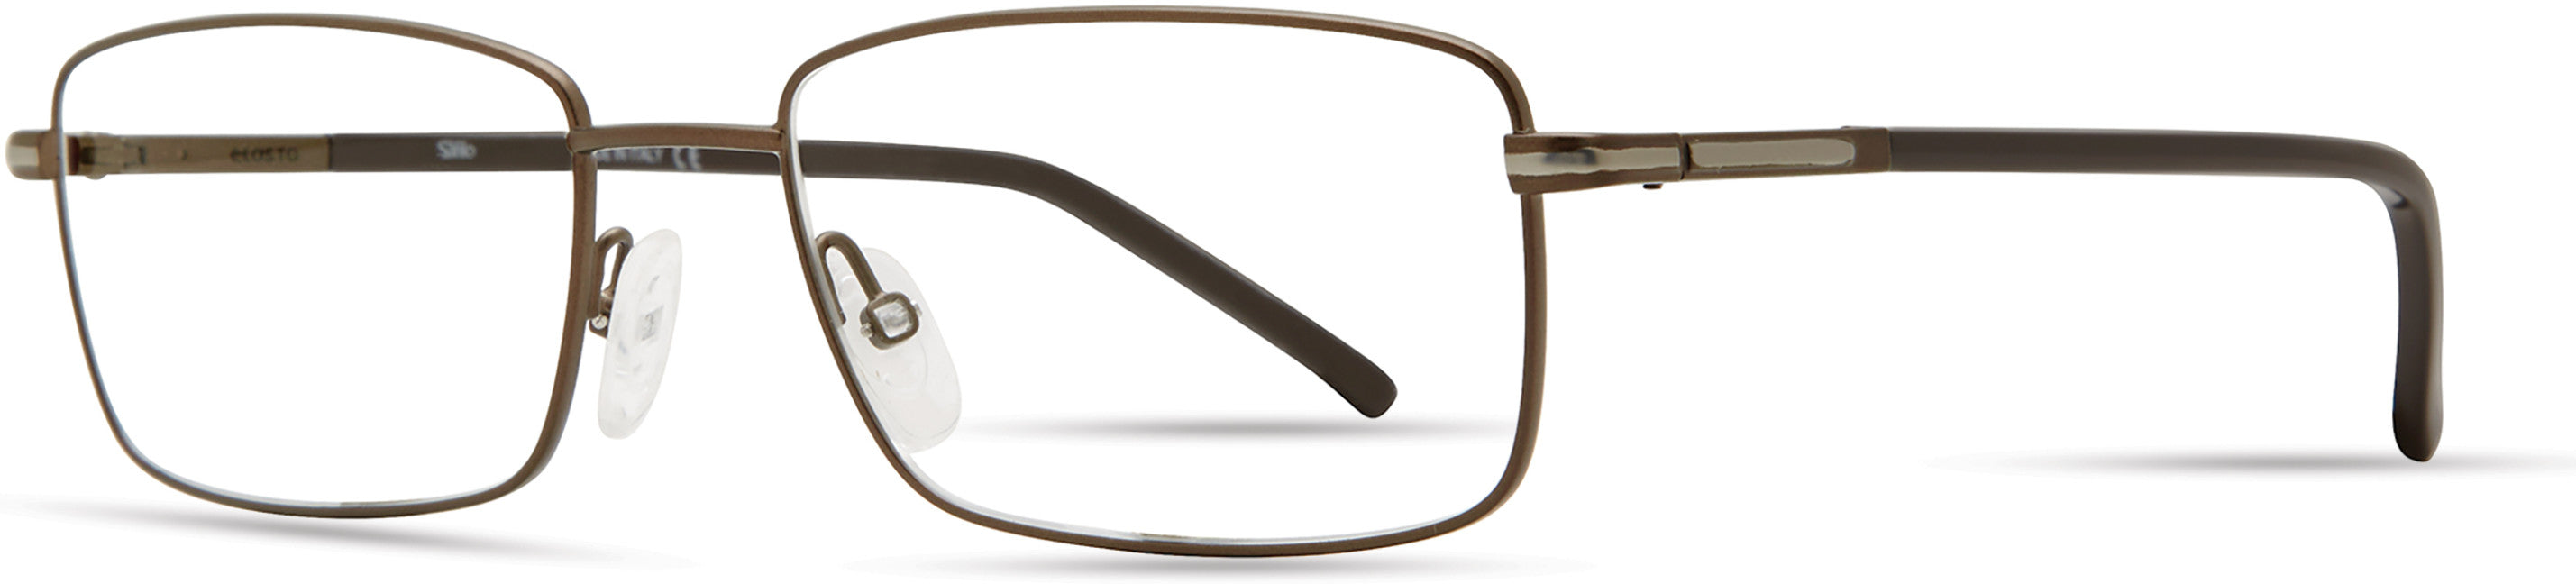  Elasta 7232 Rectangular Eyeglasses 04IN-04IN  Matte Brown (00 Demo Lens)